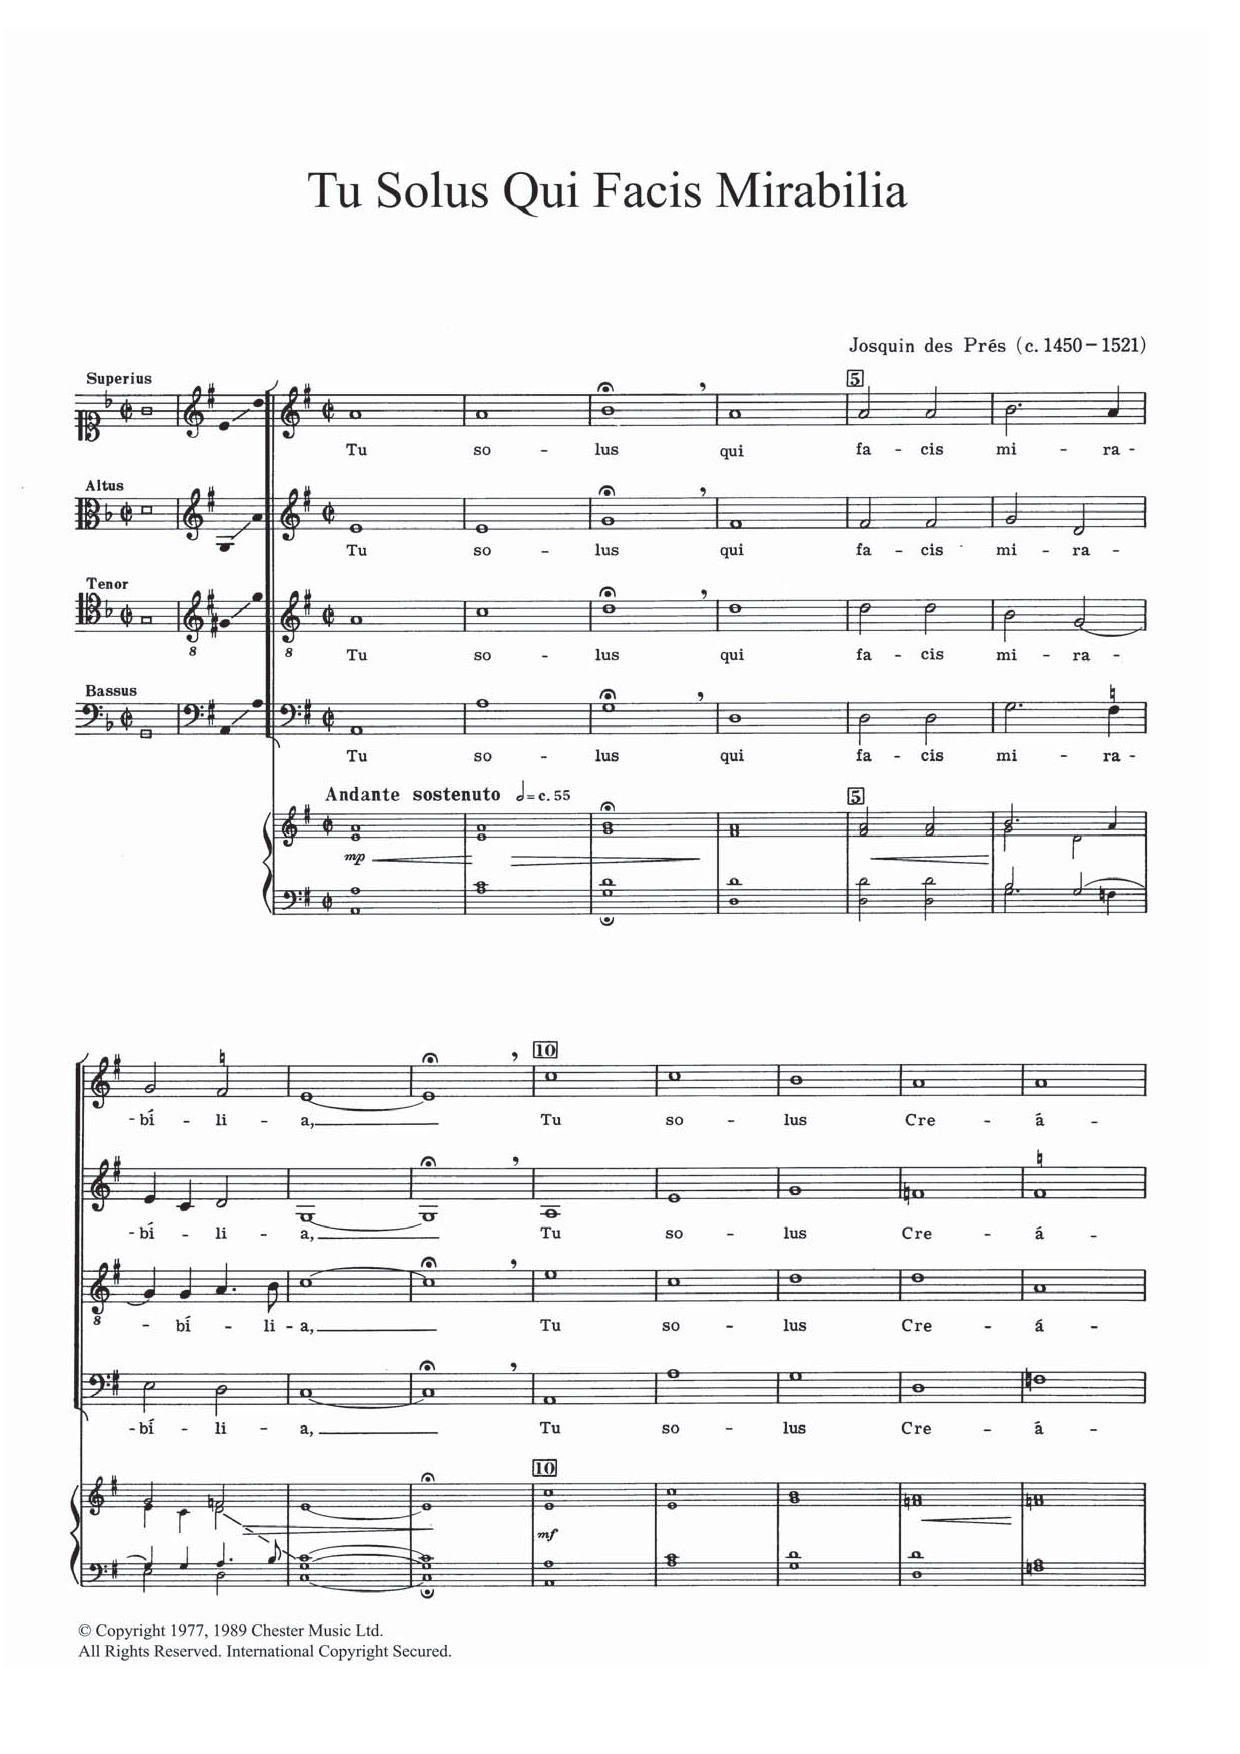 Josquin Des Pres Tu Solis Qui Facis Mirabilia Sheet Music Notes & Chords for SATB - Download or Print PDF